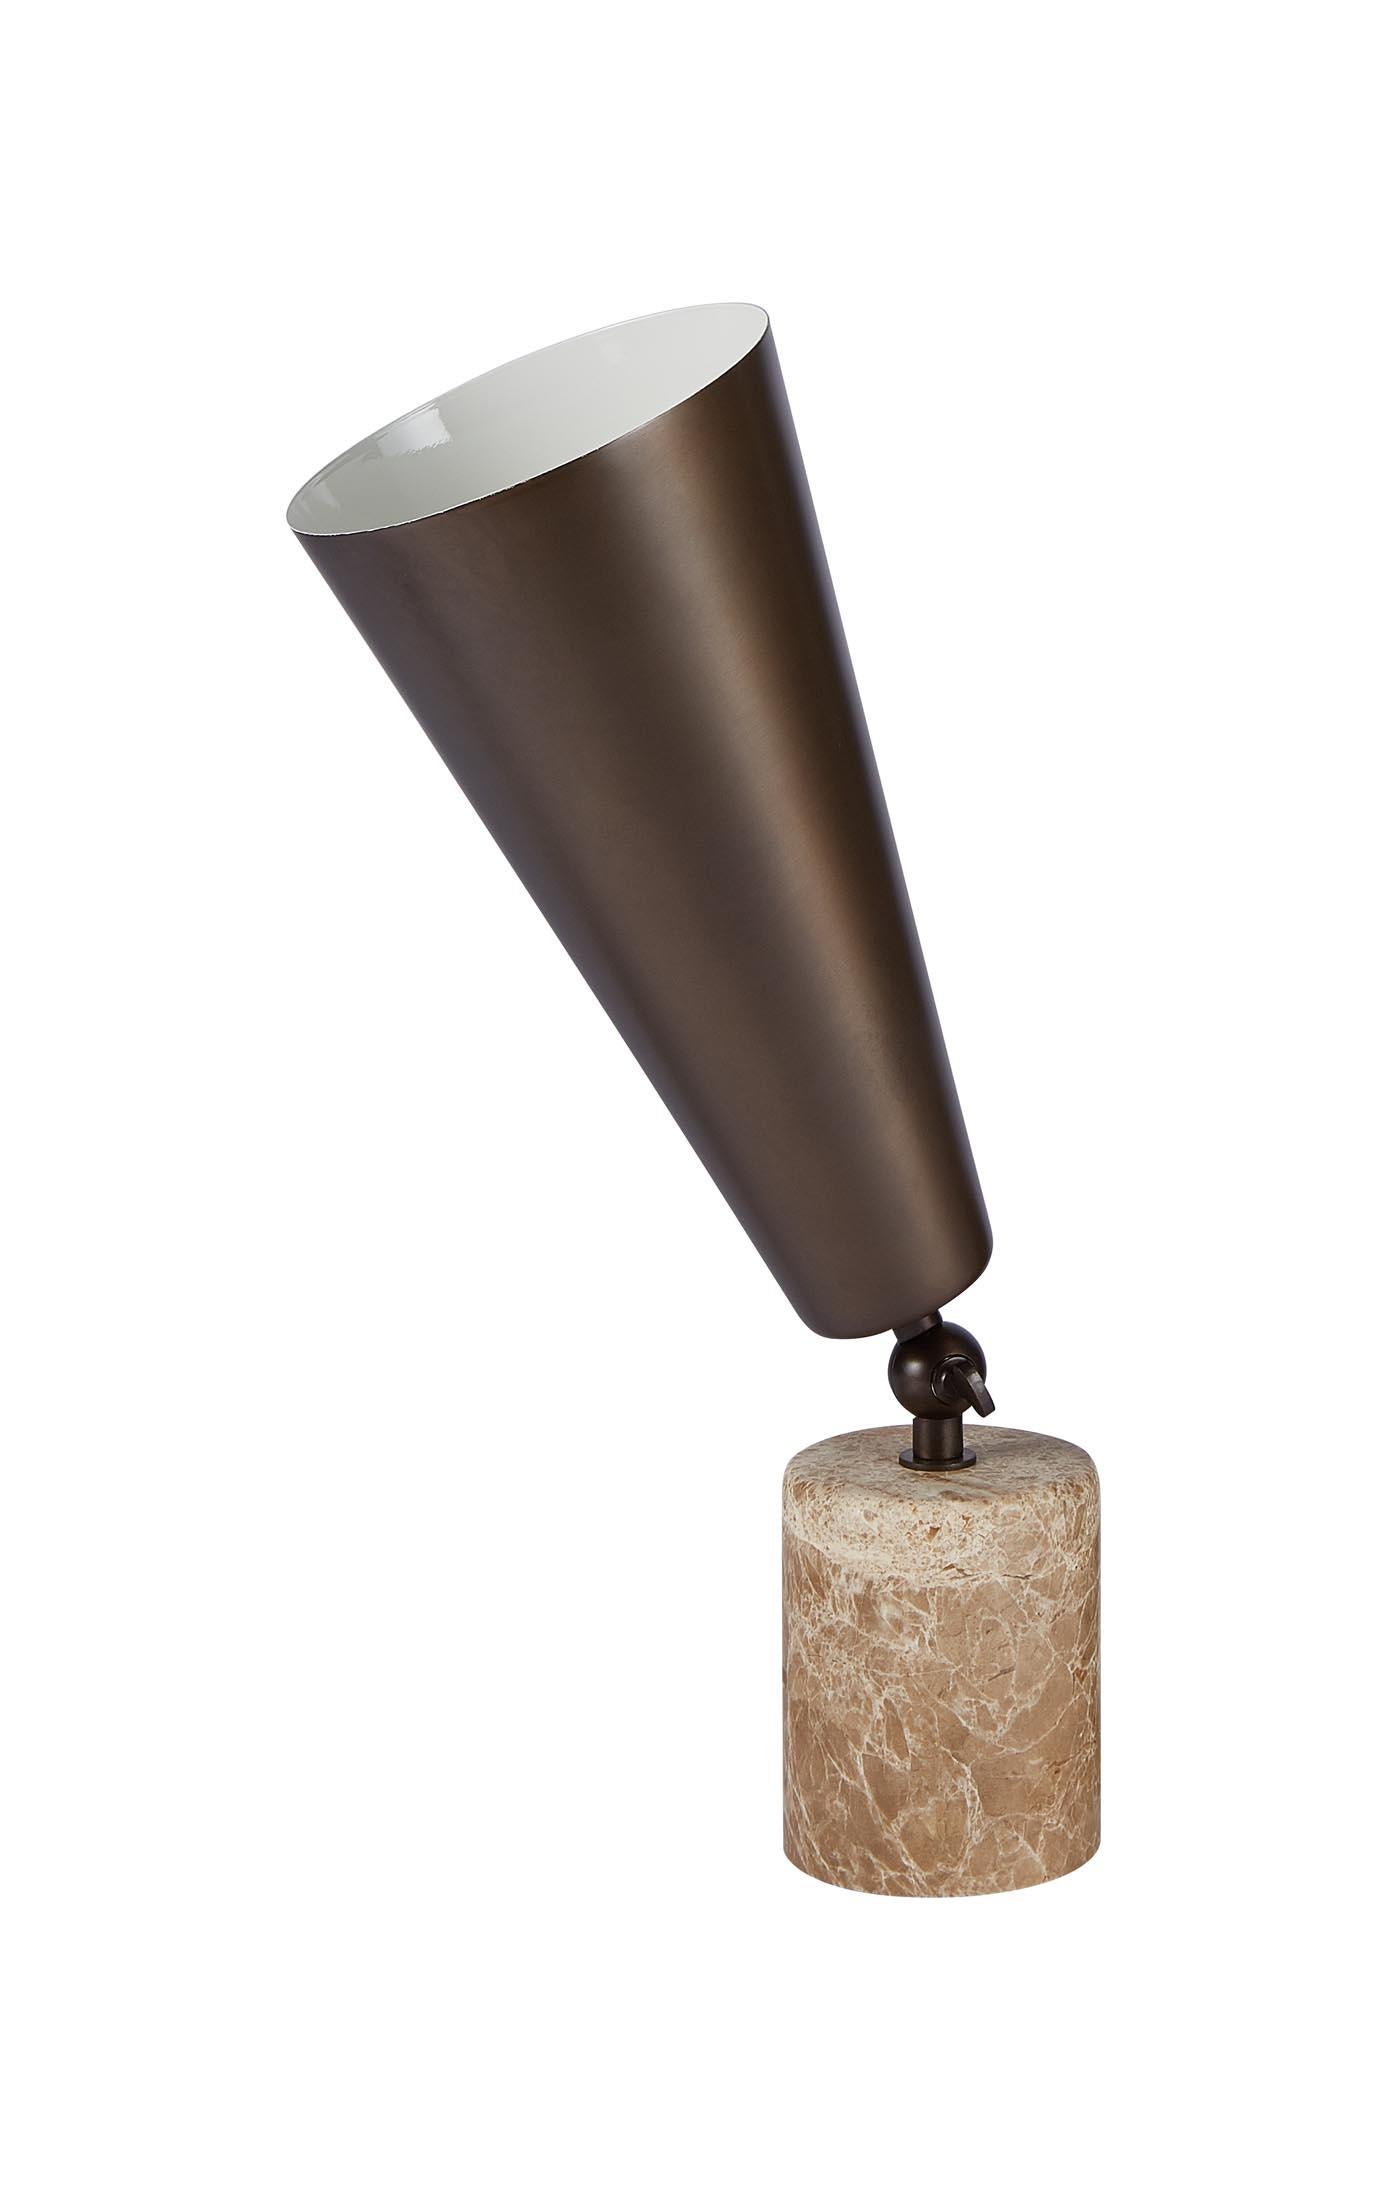 Tato Italia 'Vox' Table Lamp in White Carrara Marble and Satin Brass For Sale 6